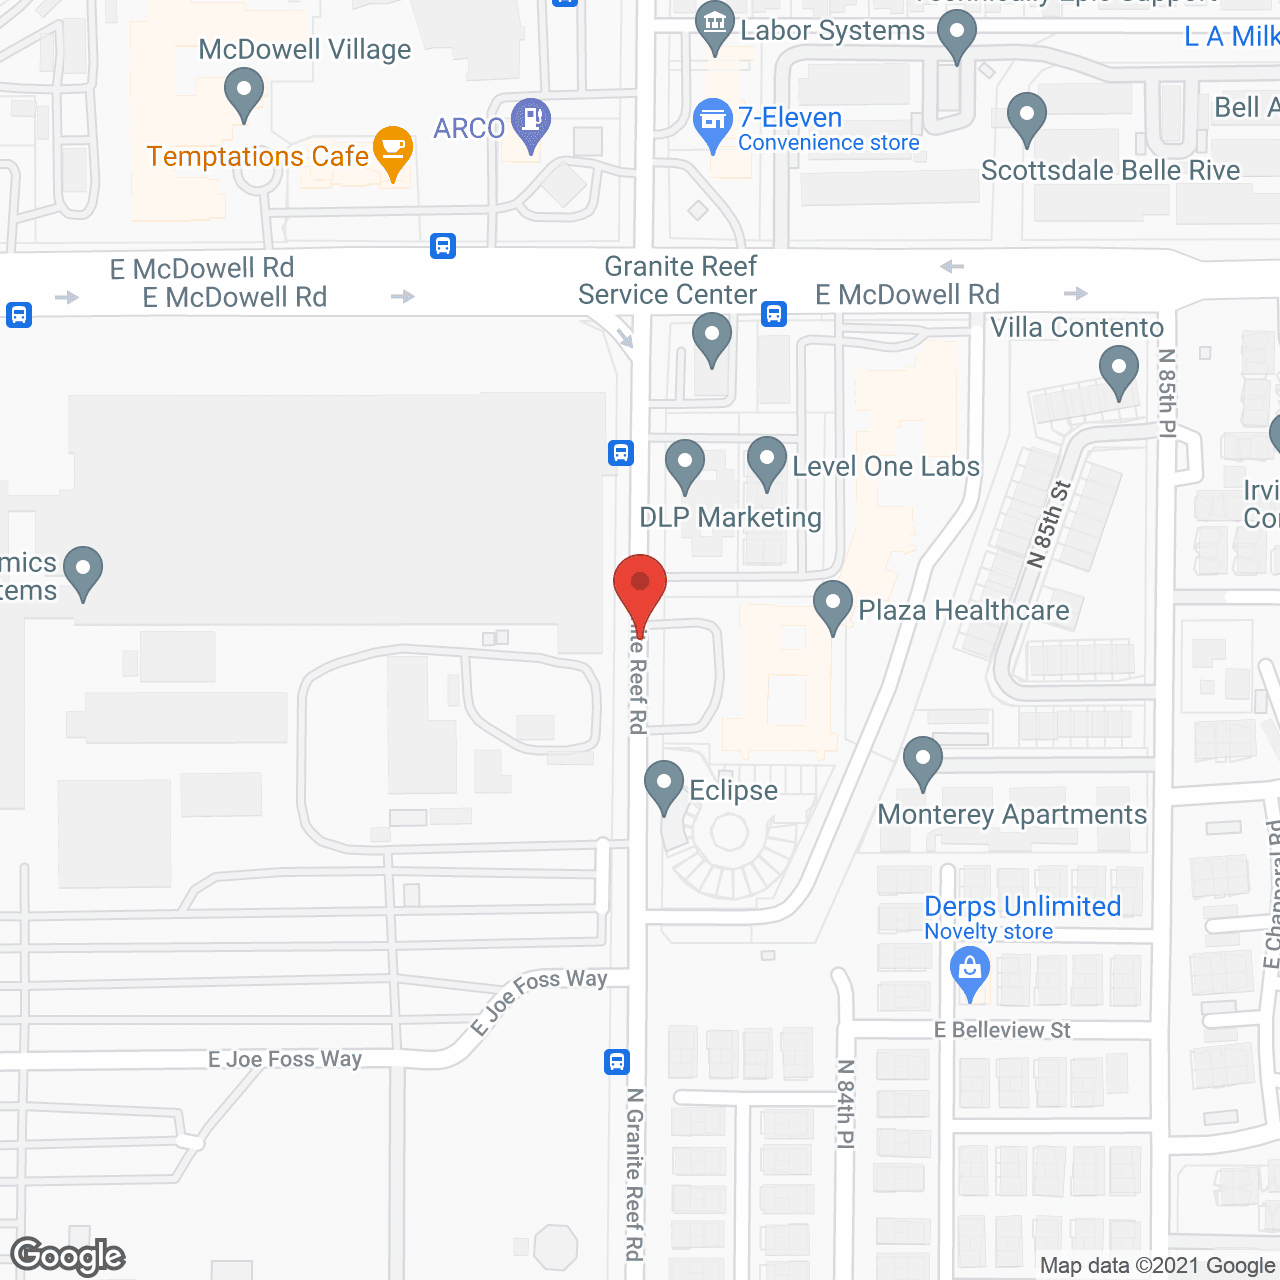 Plaza Healthcare in google map